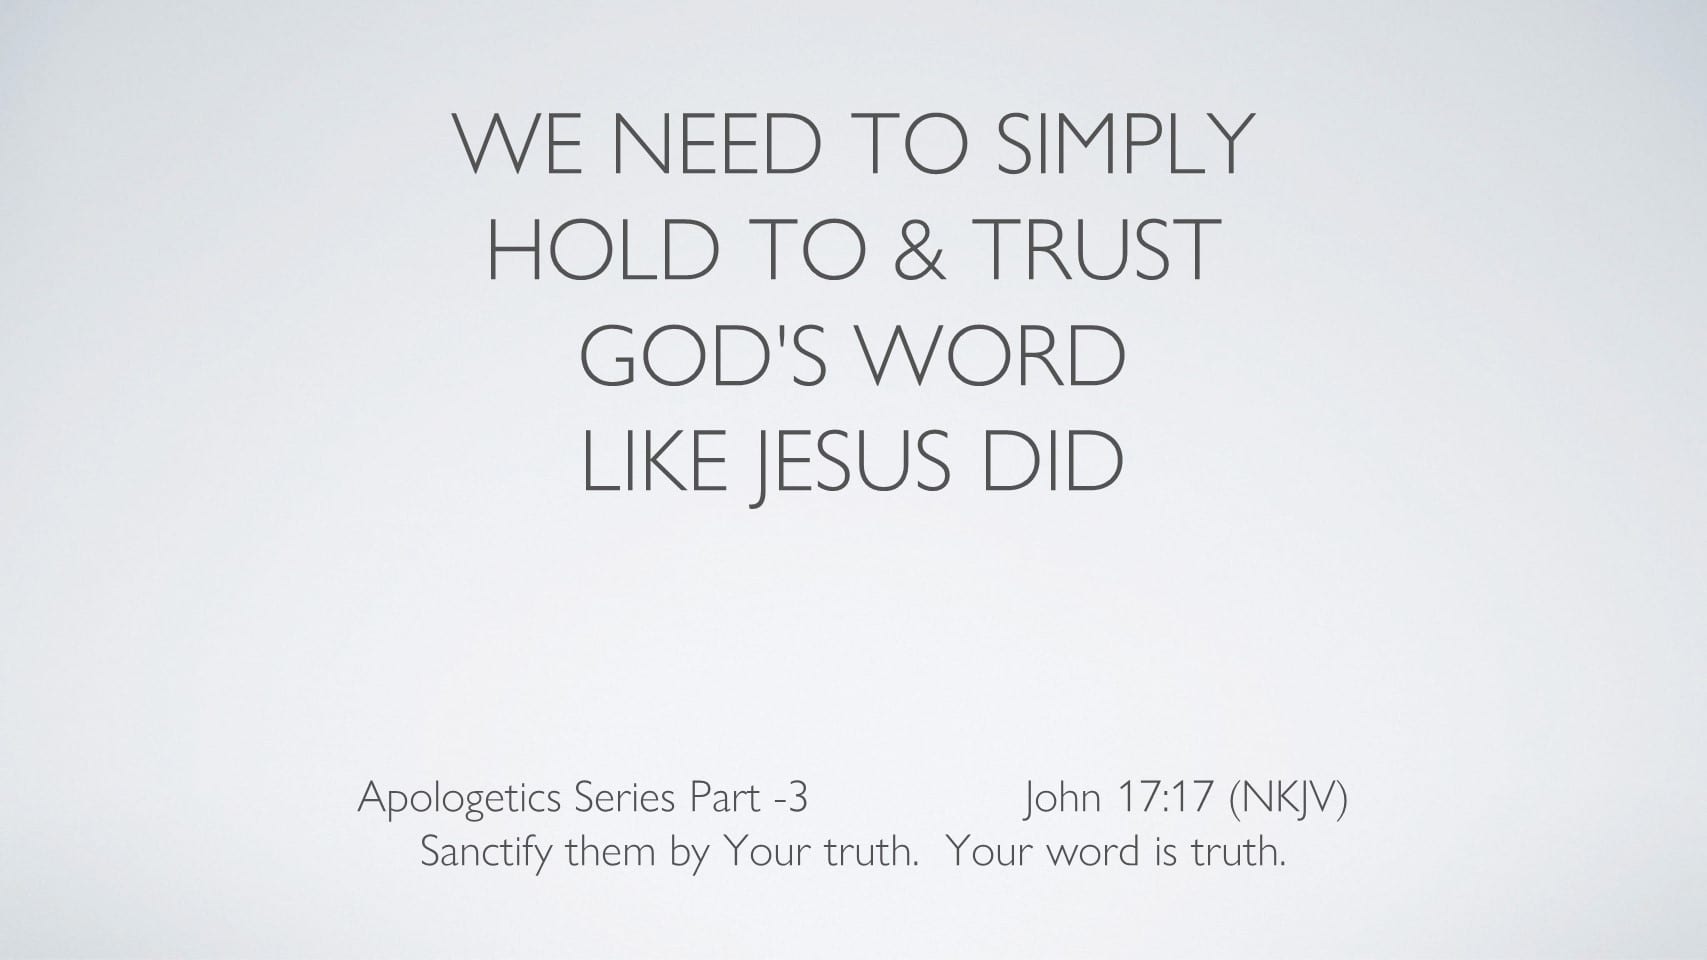 Trusting God's Word